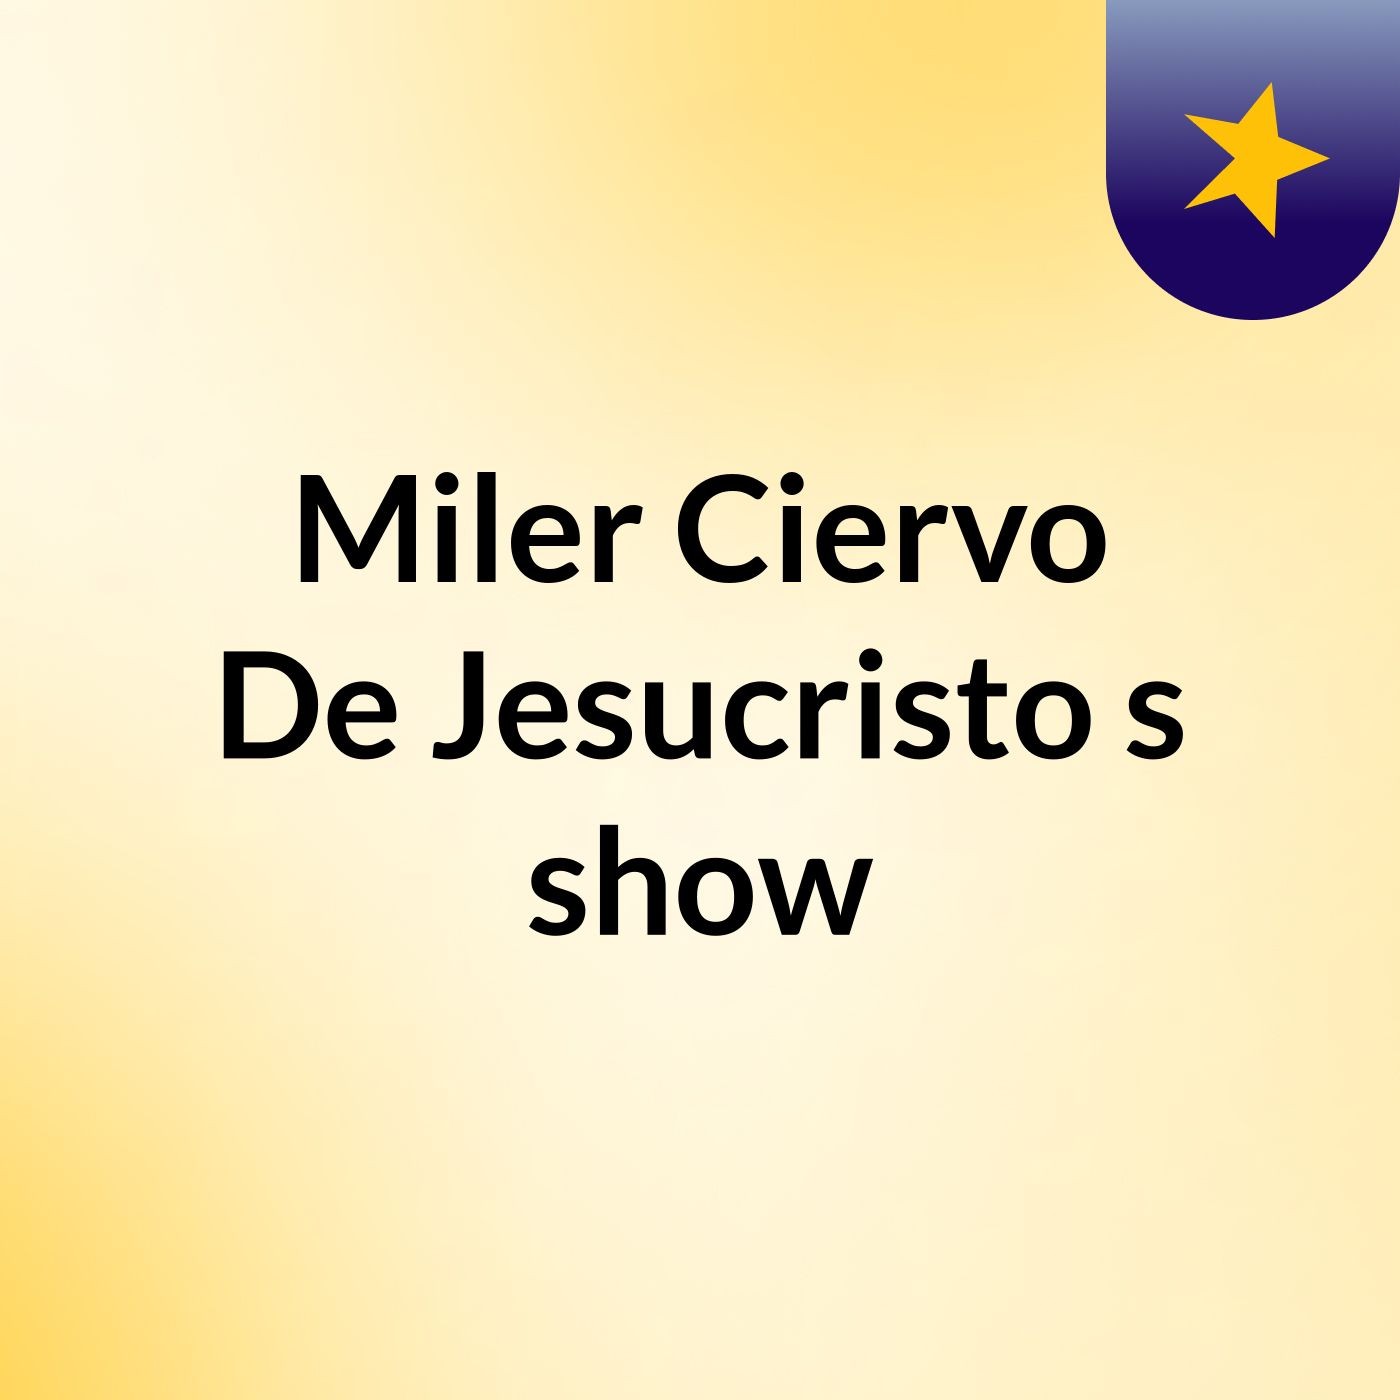 Miler Ciervo De Jesucristo's show